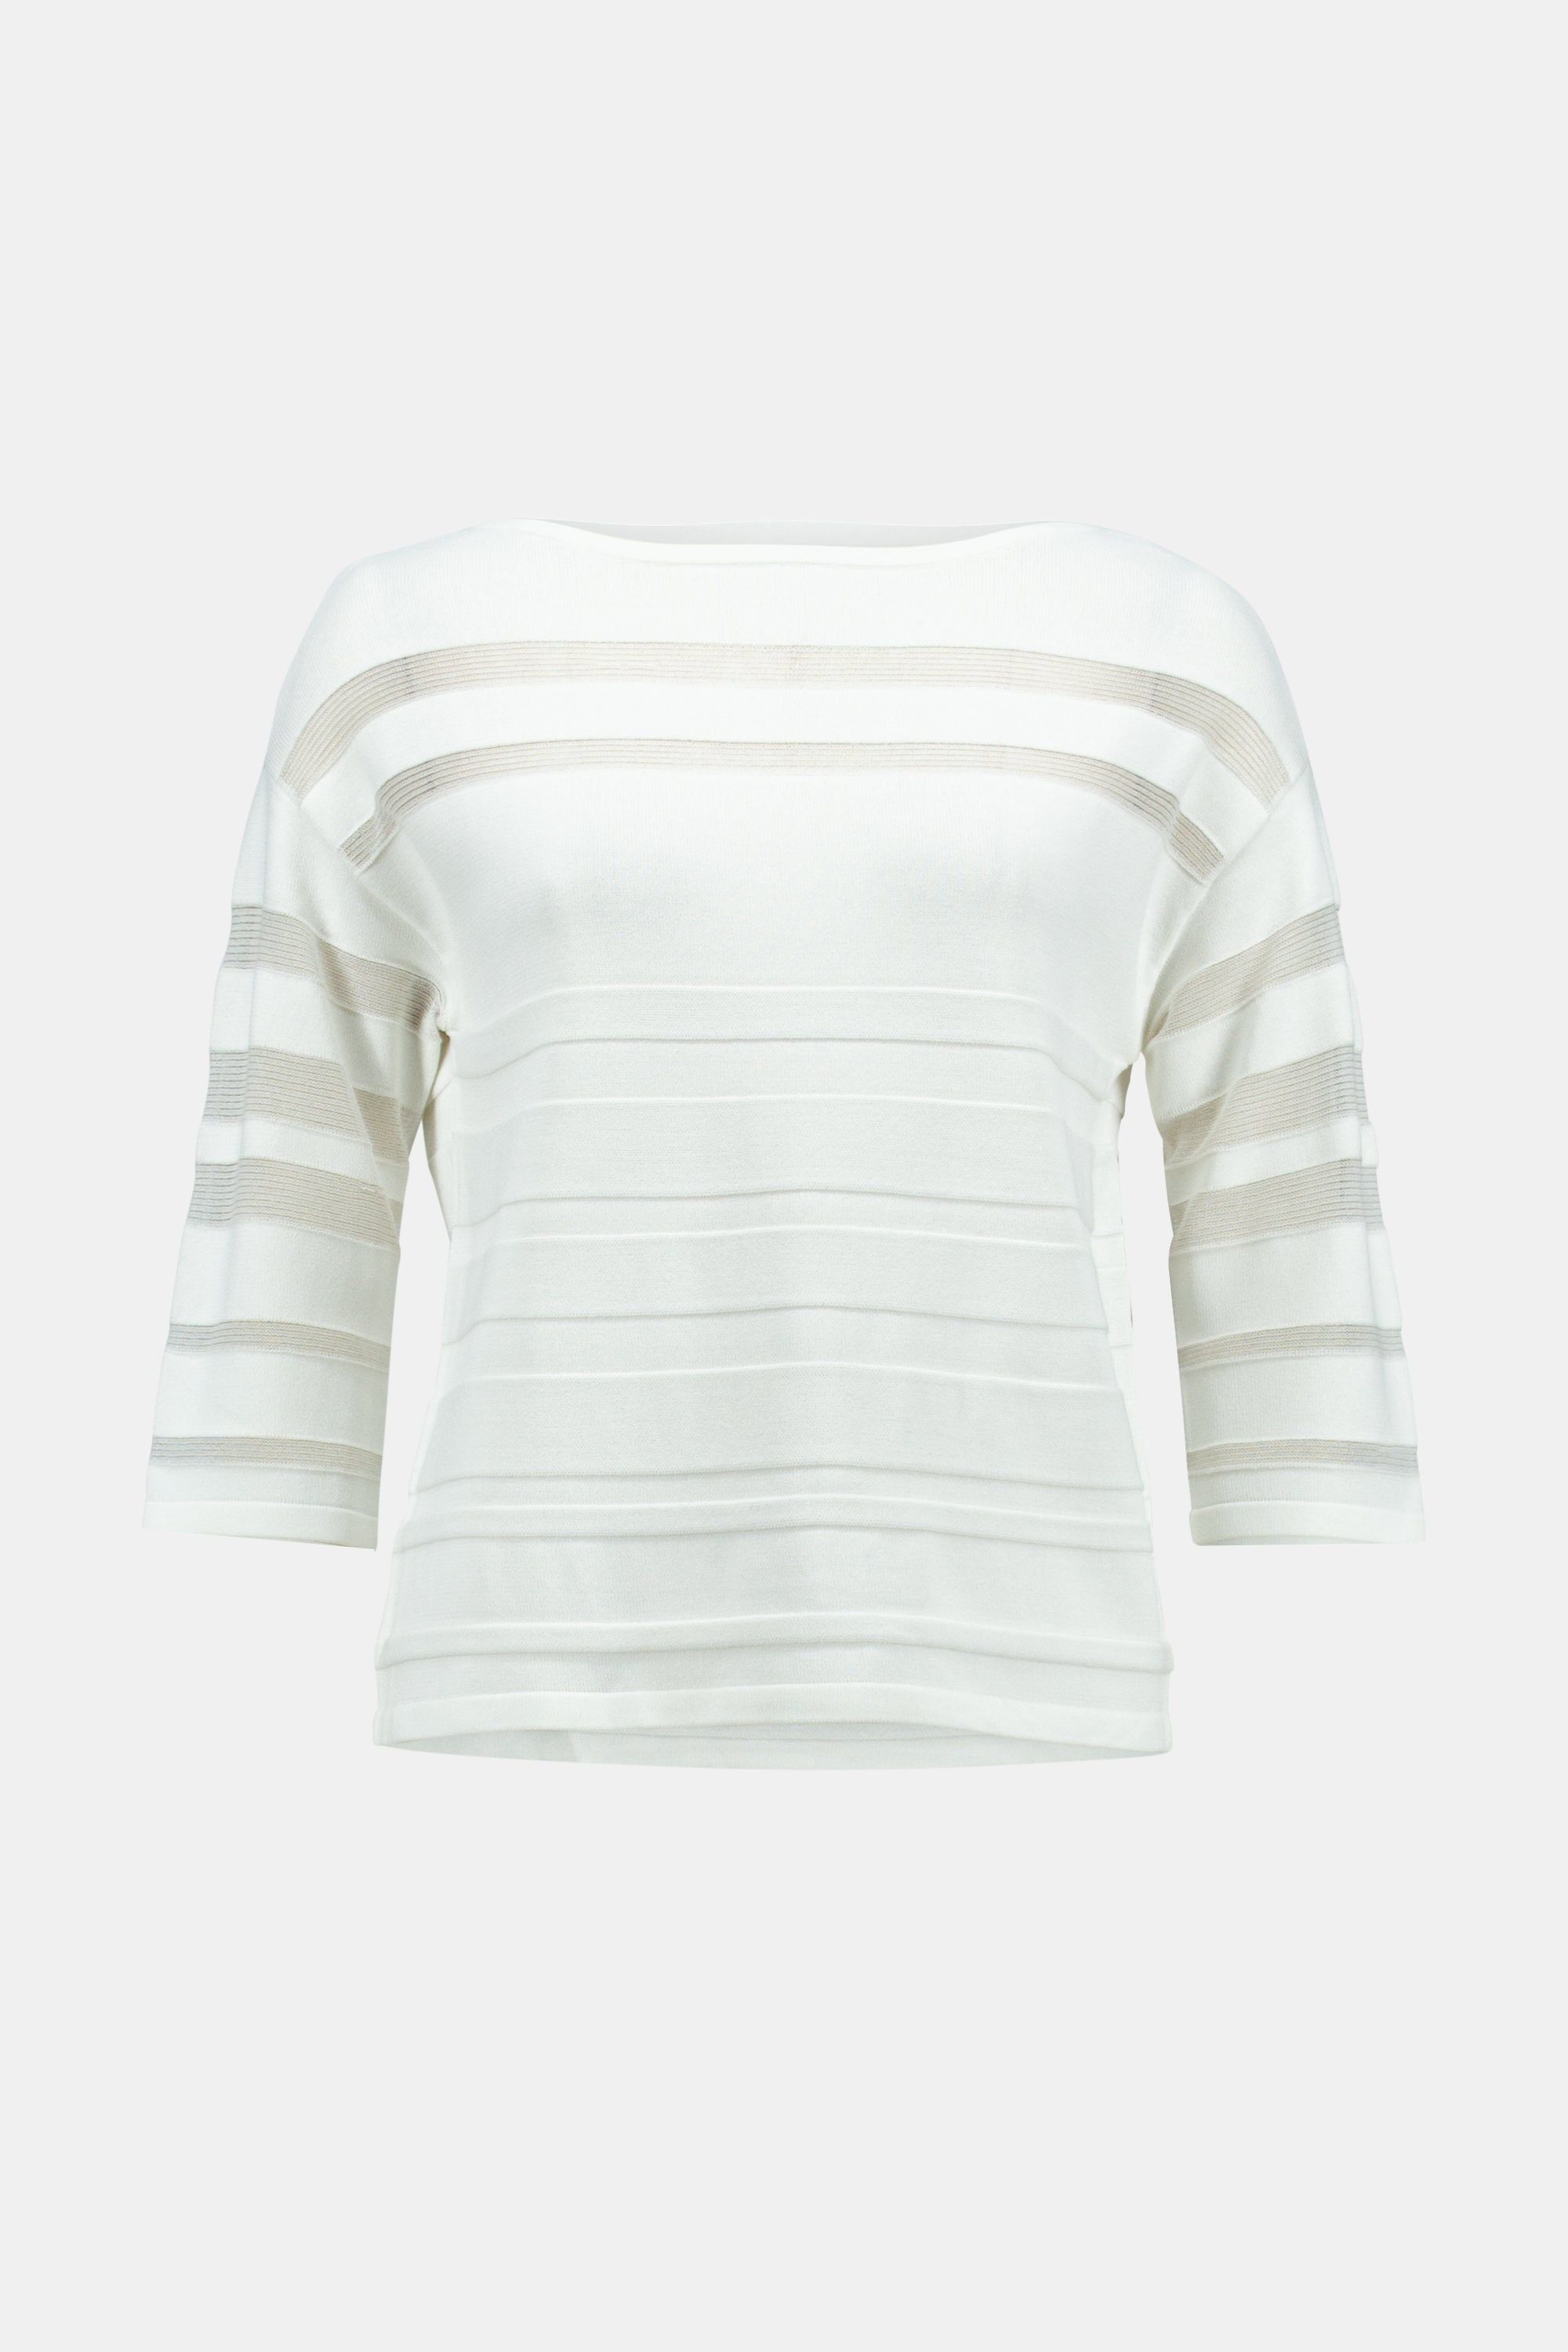 Joseph Ribkoff Textured Striped Sweater - Style 231949, vanilla